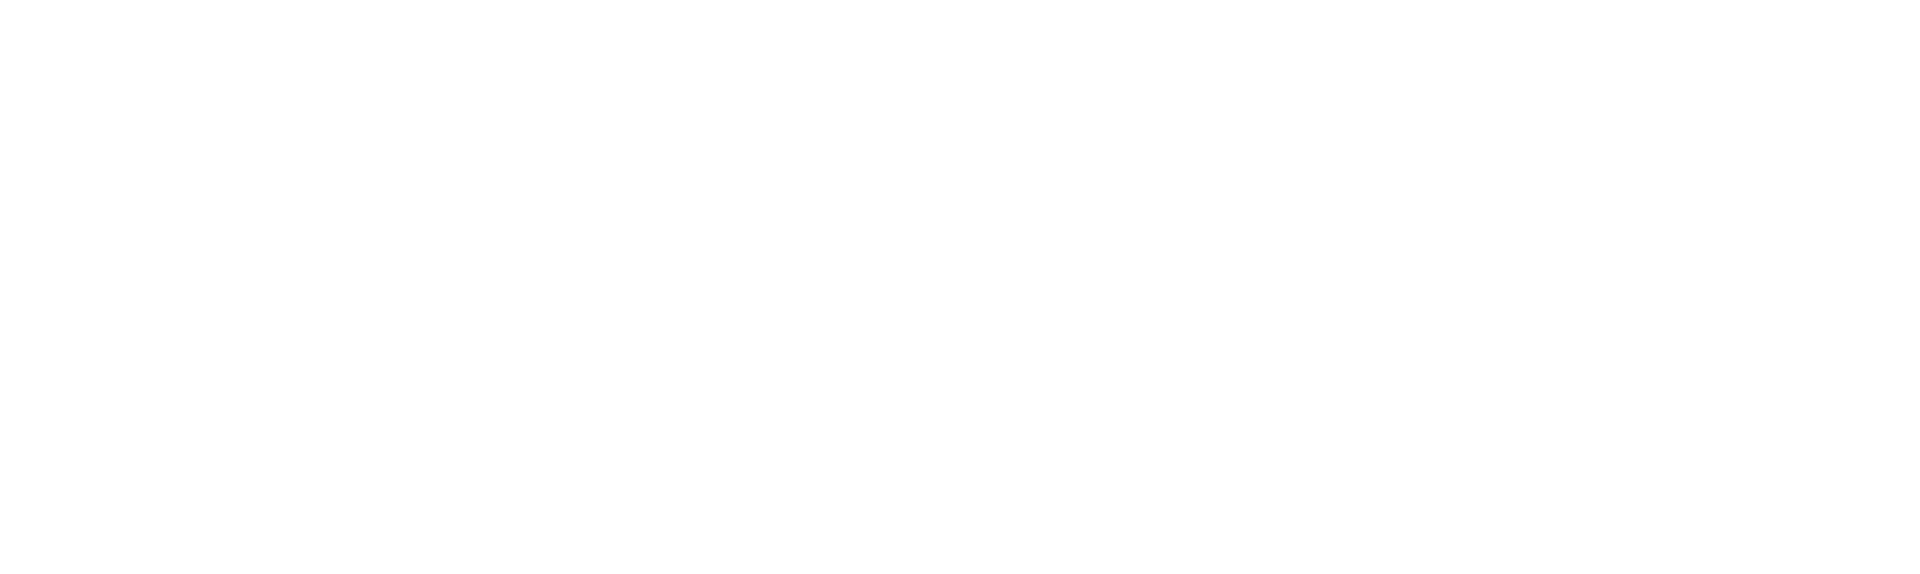 Dogleg Brewing logo